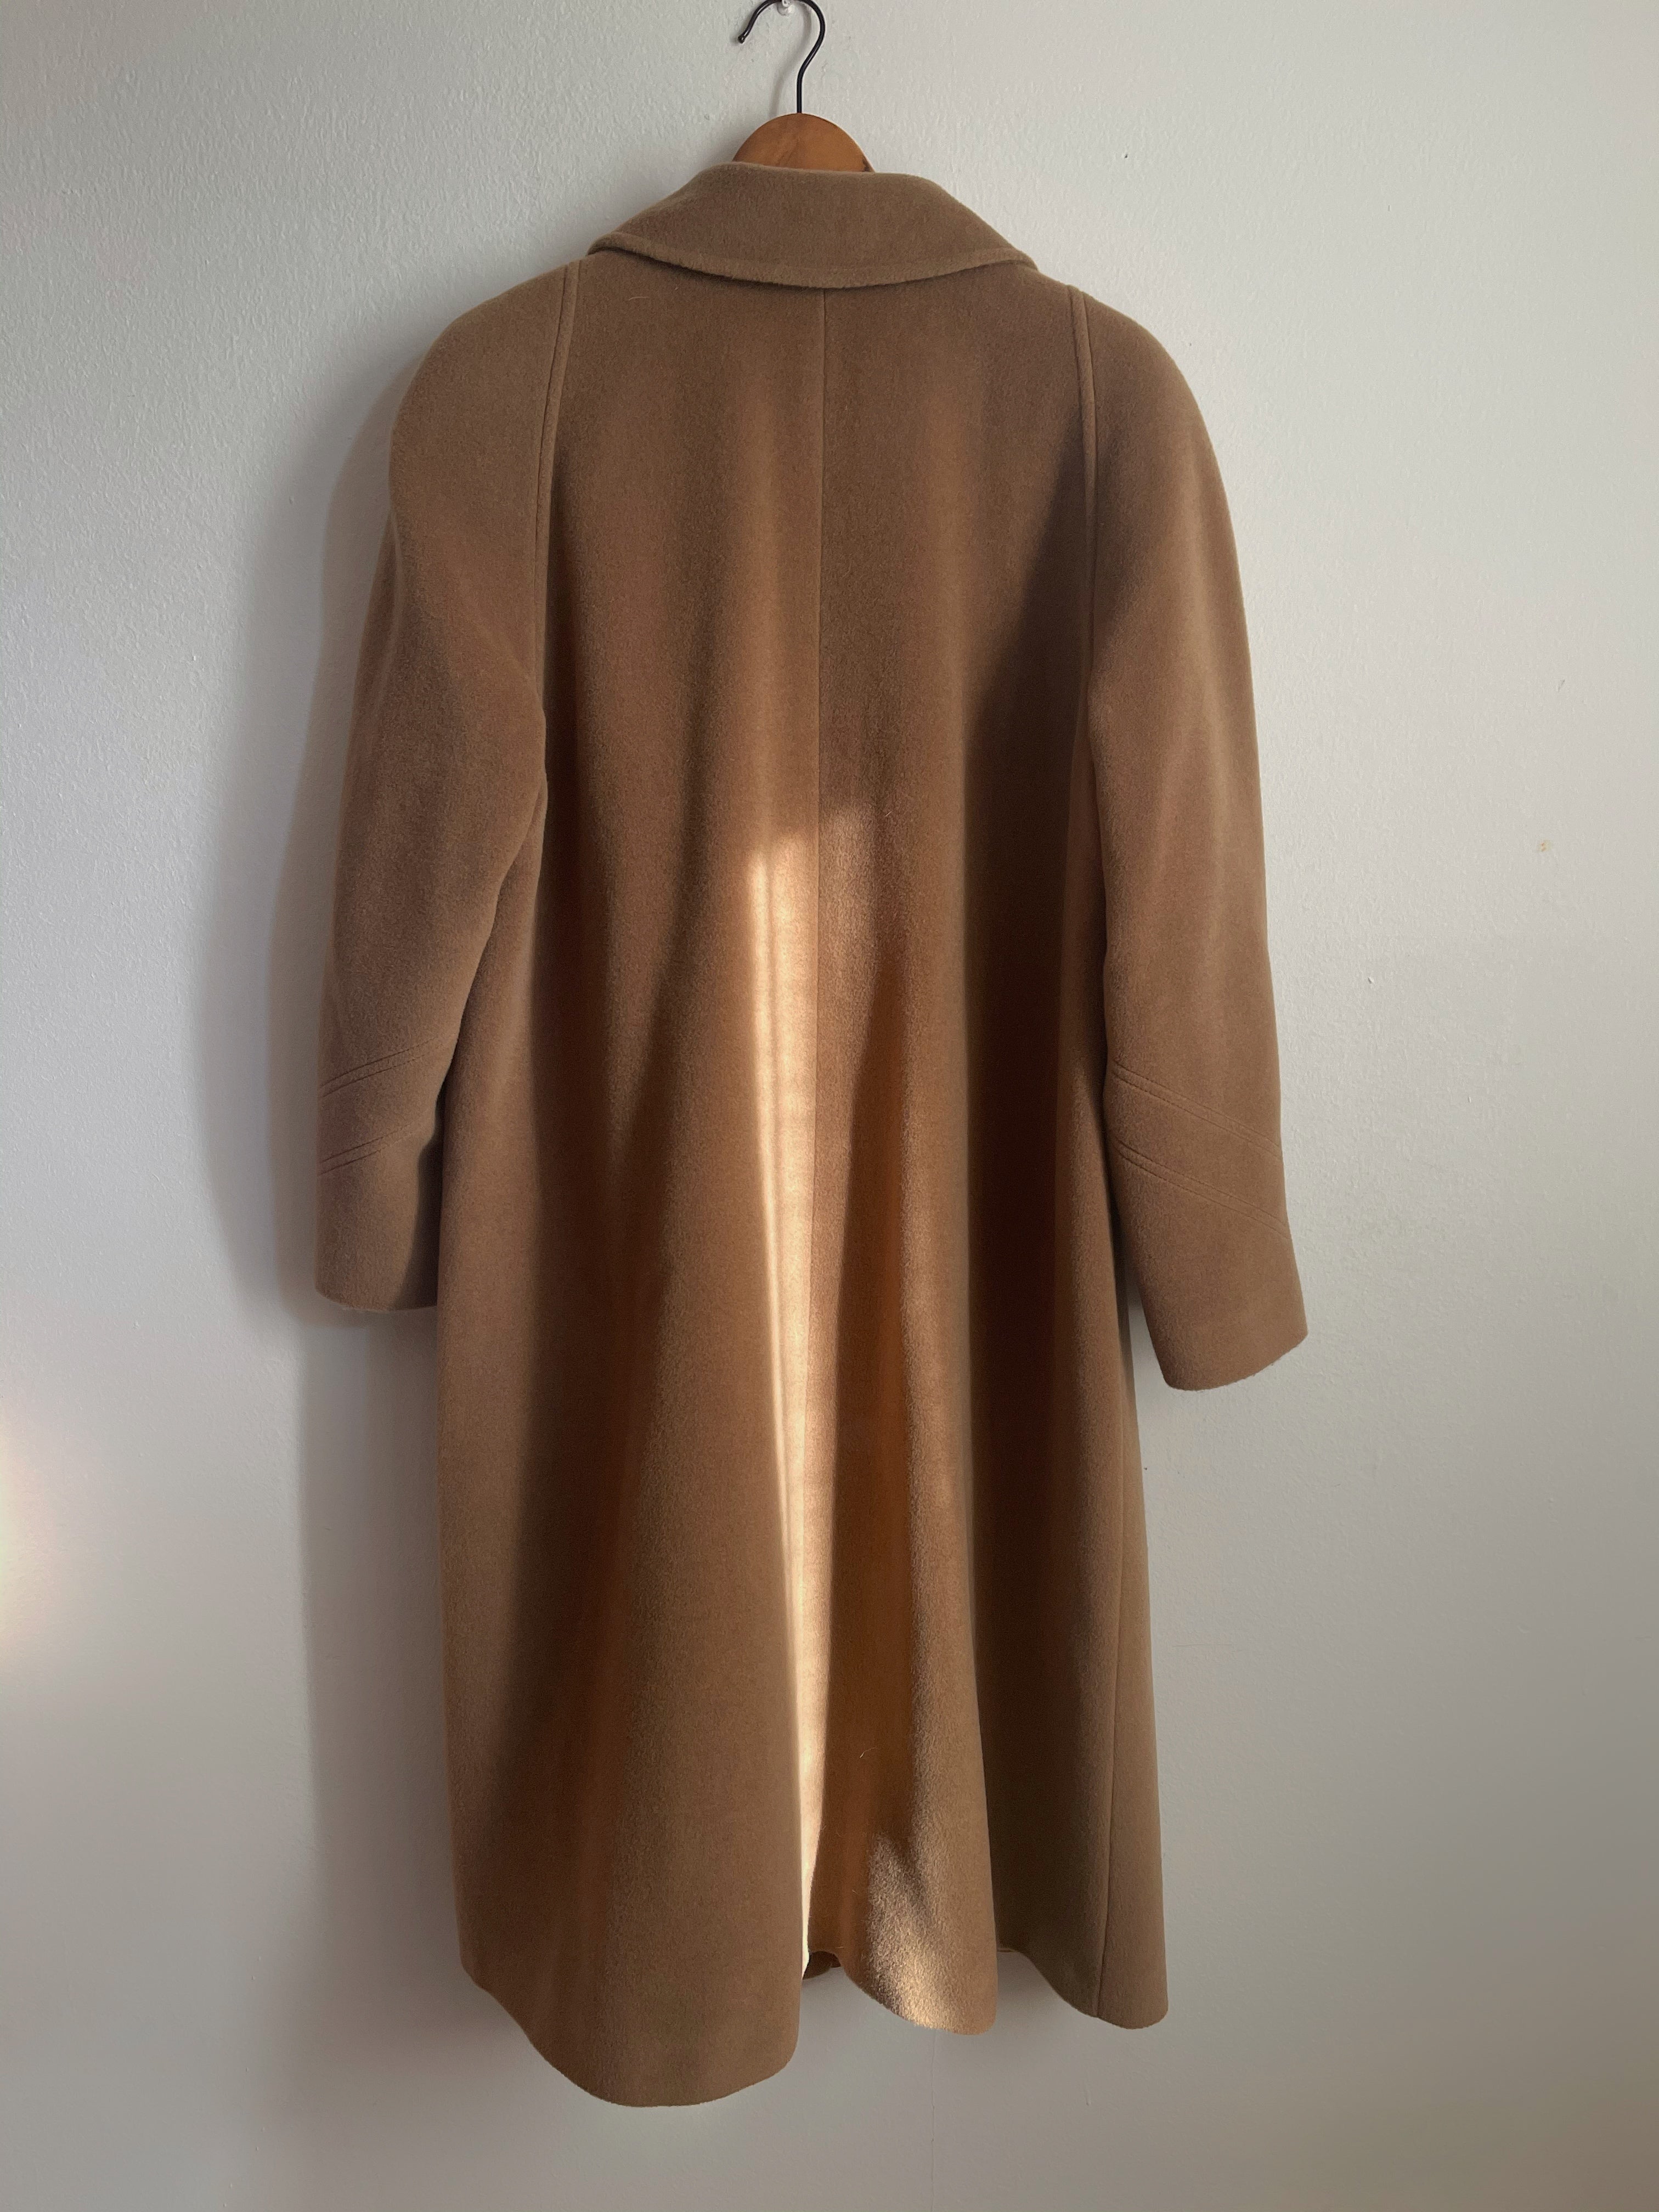 Wool camel coat